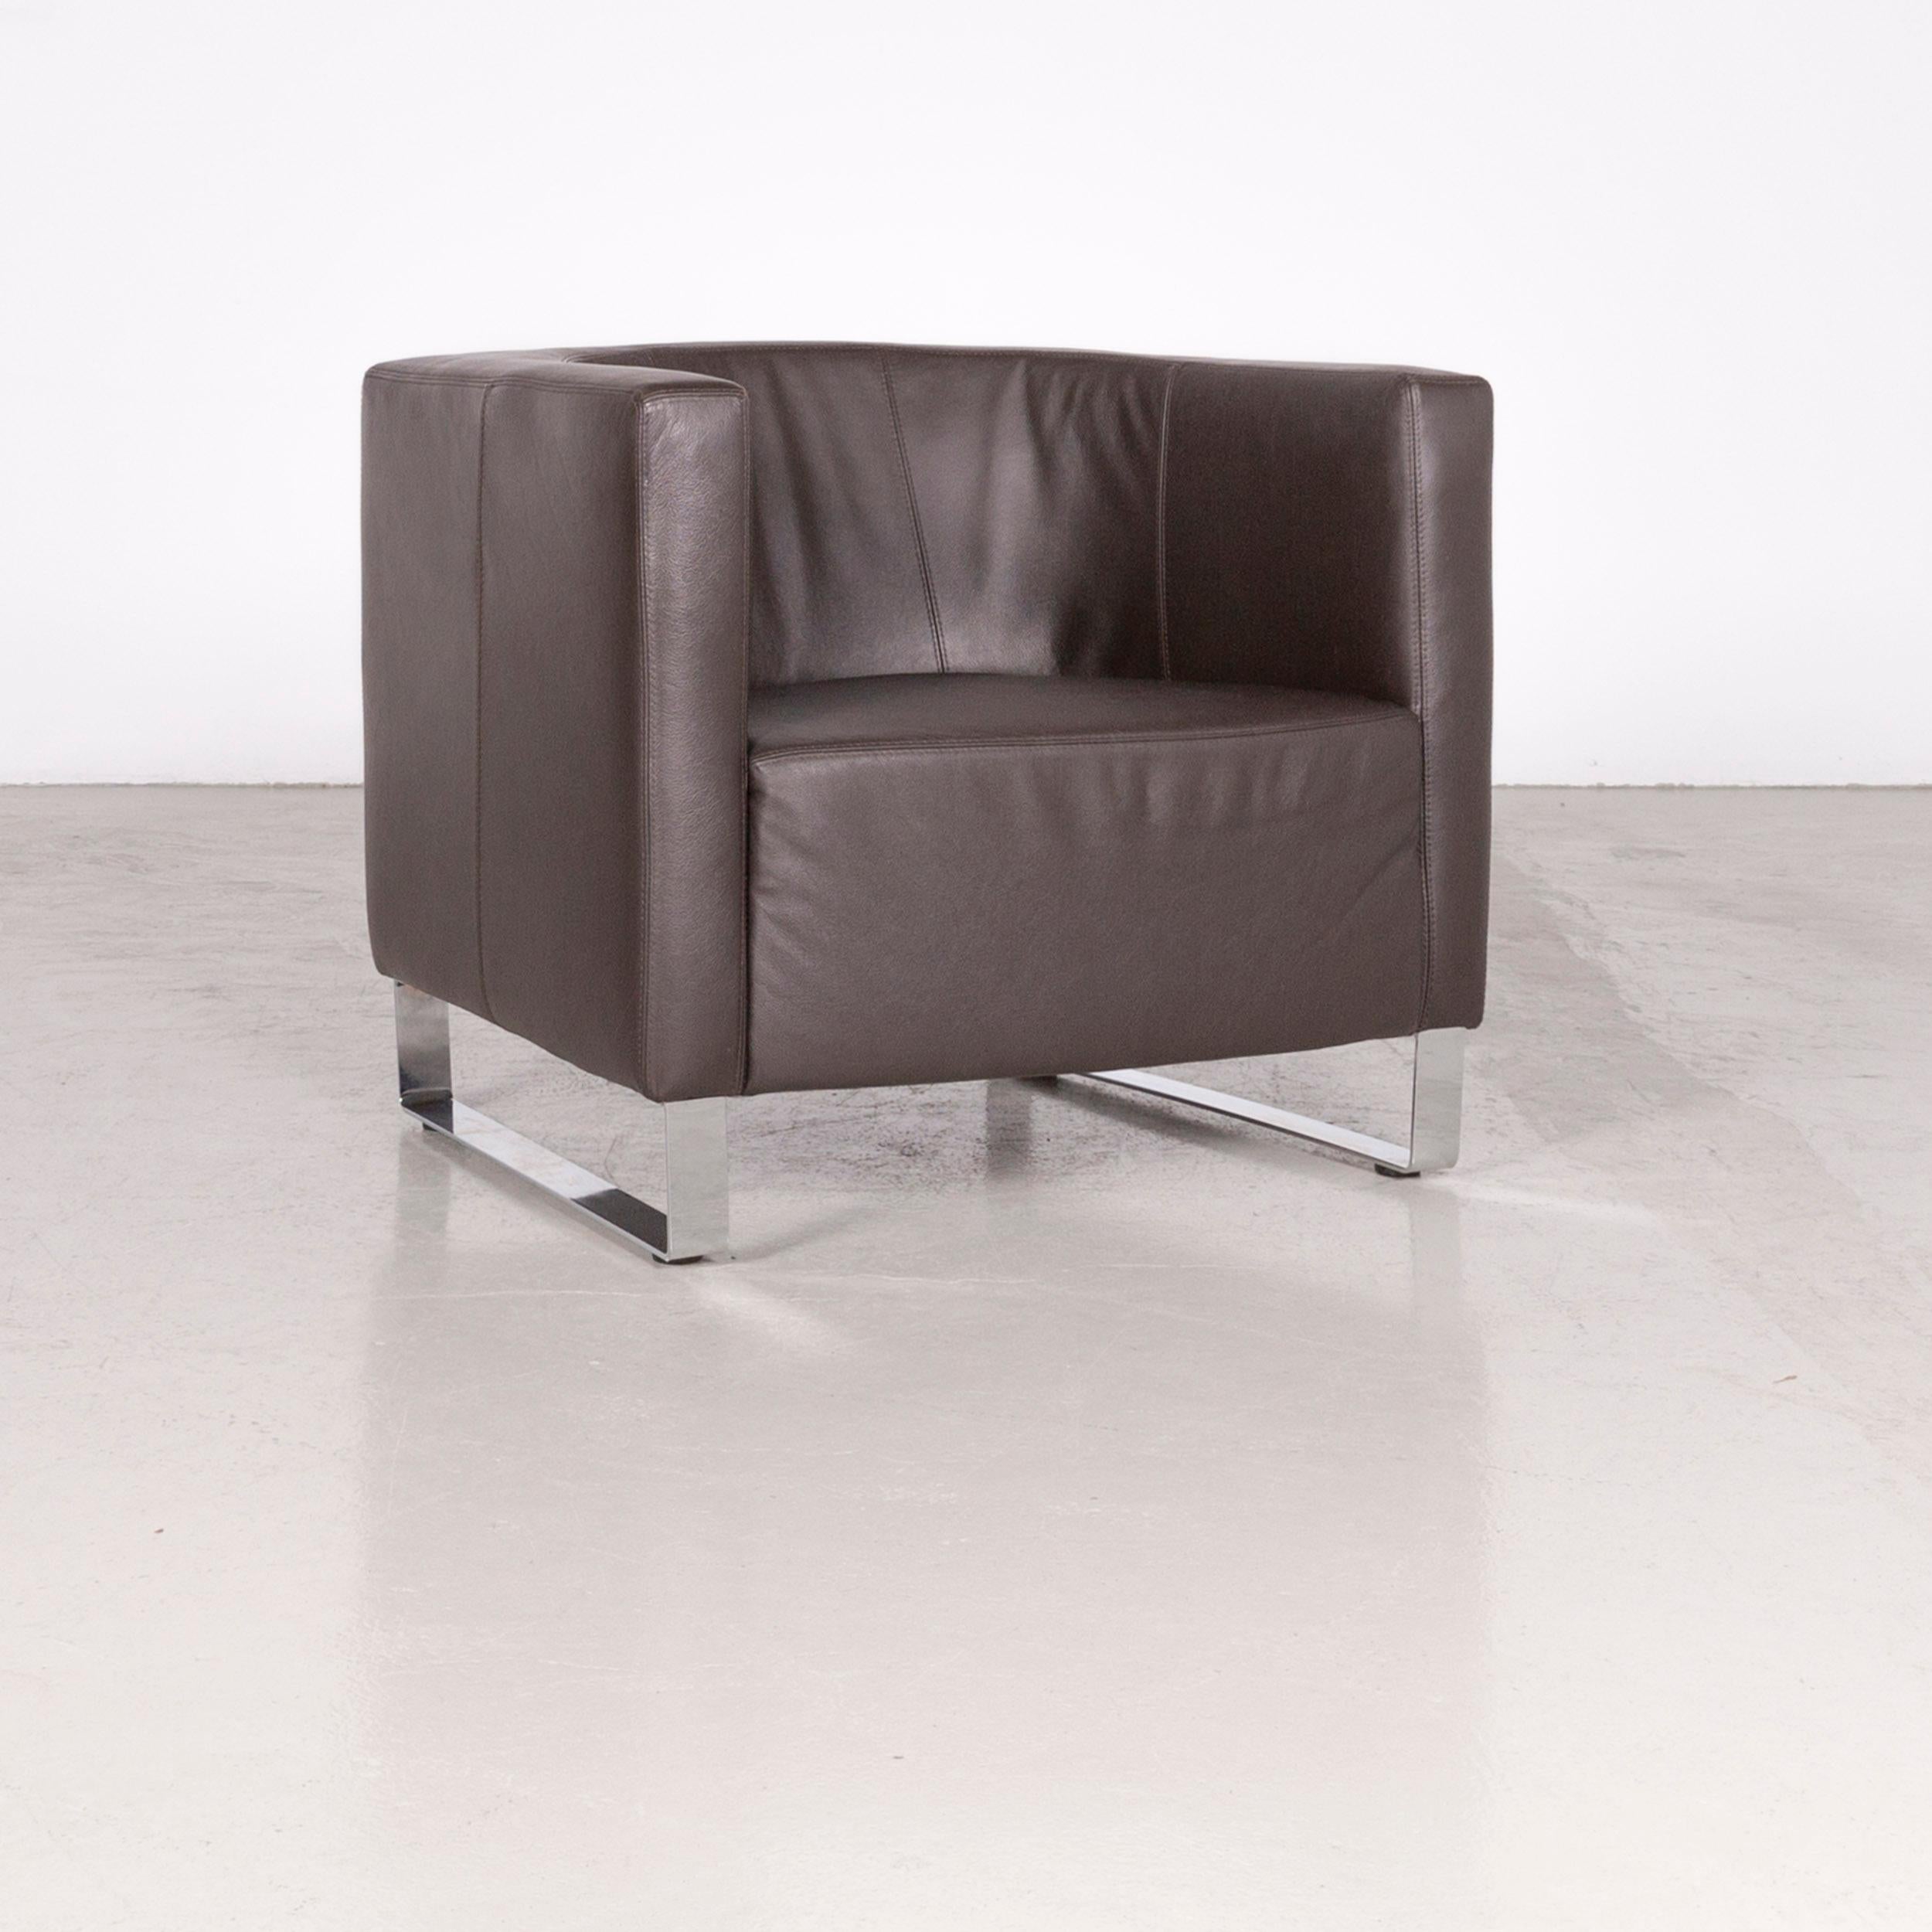 Willi Schillig Taboo designer leather armchair set brown.